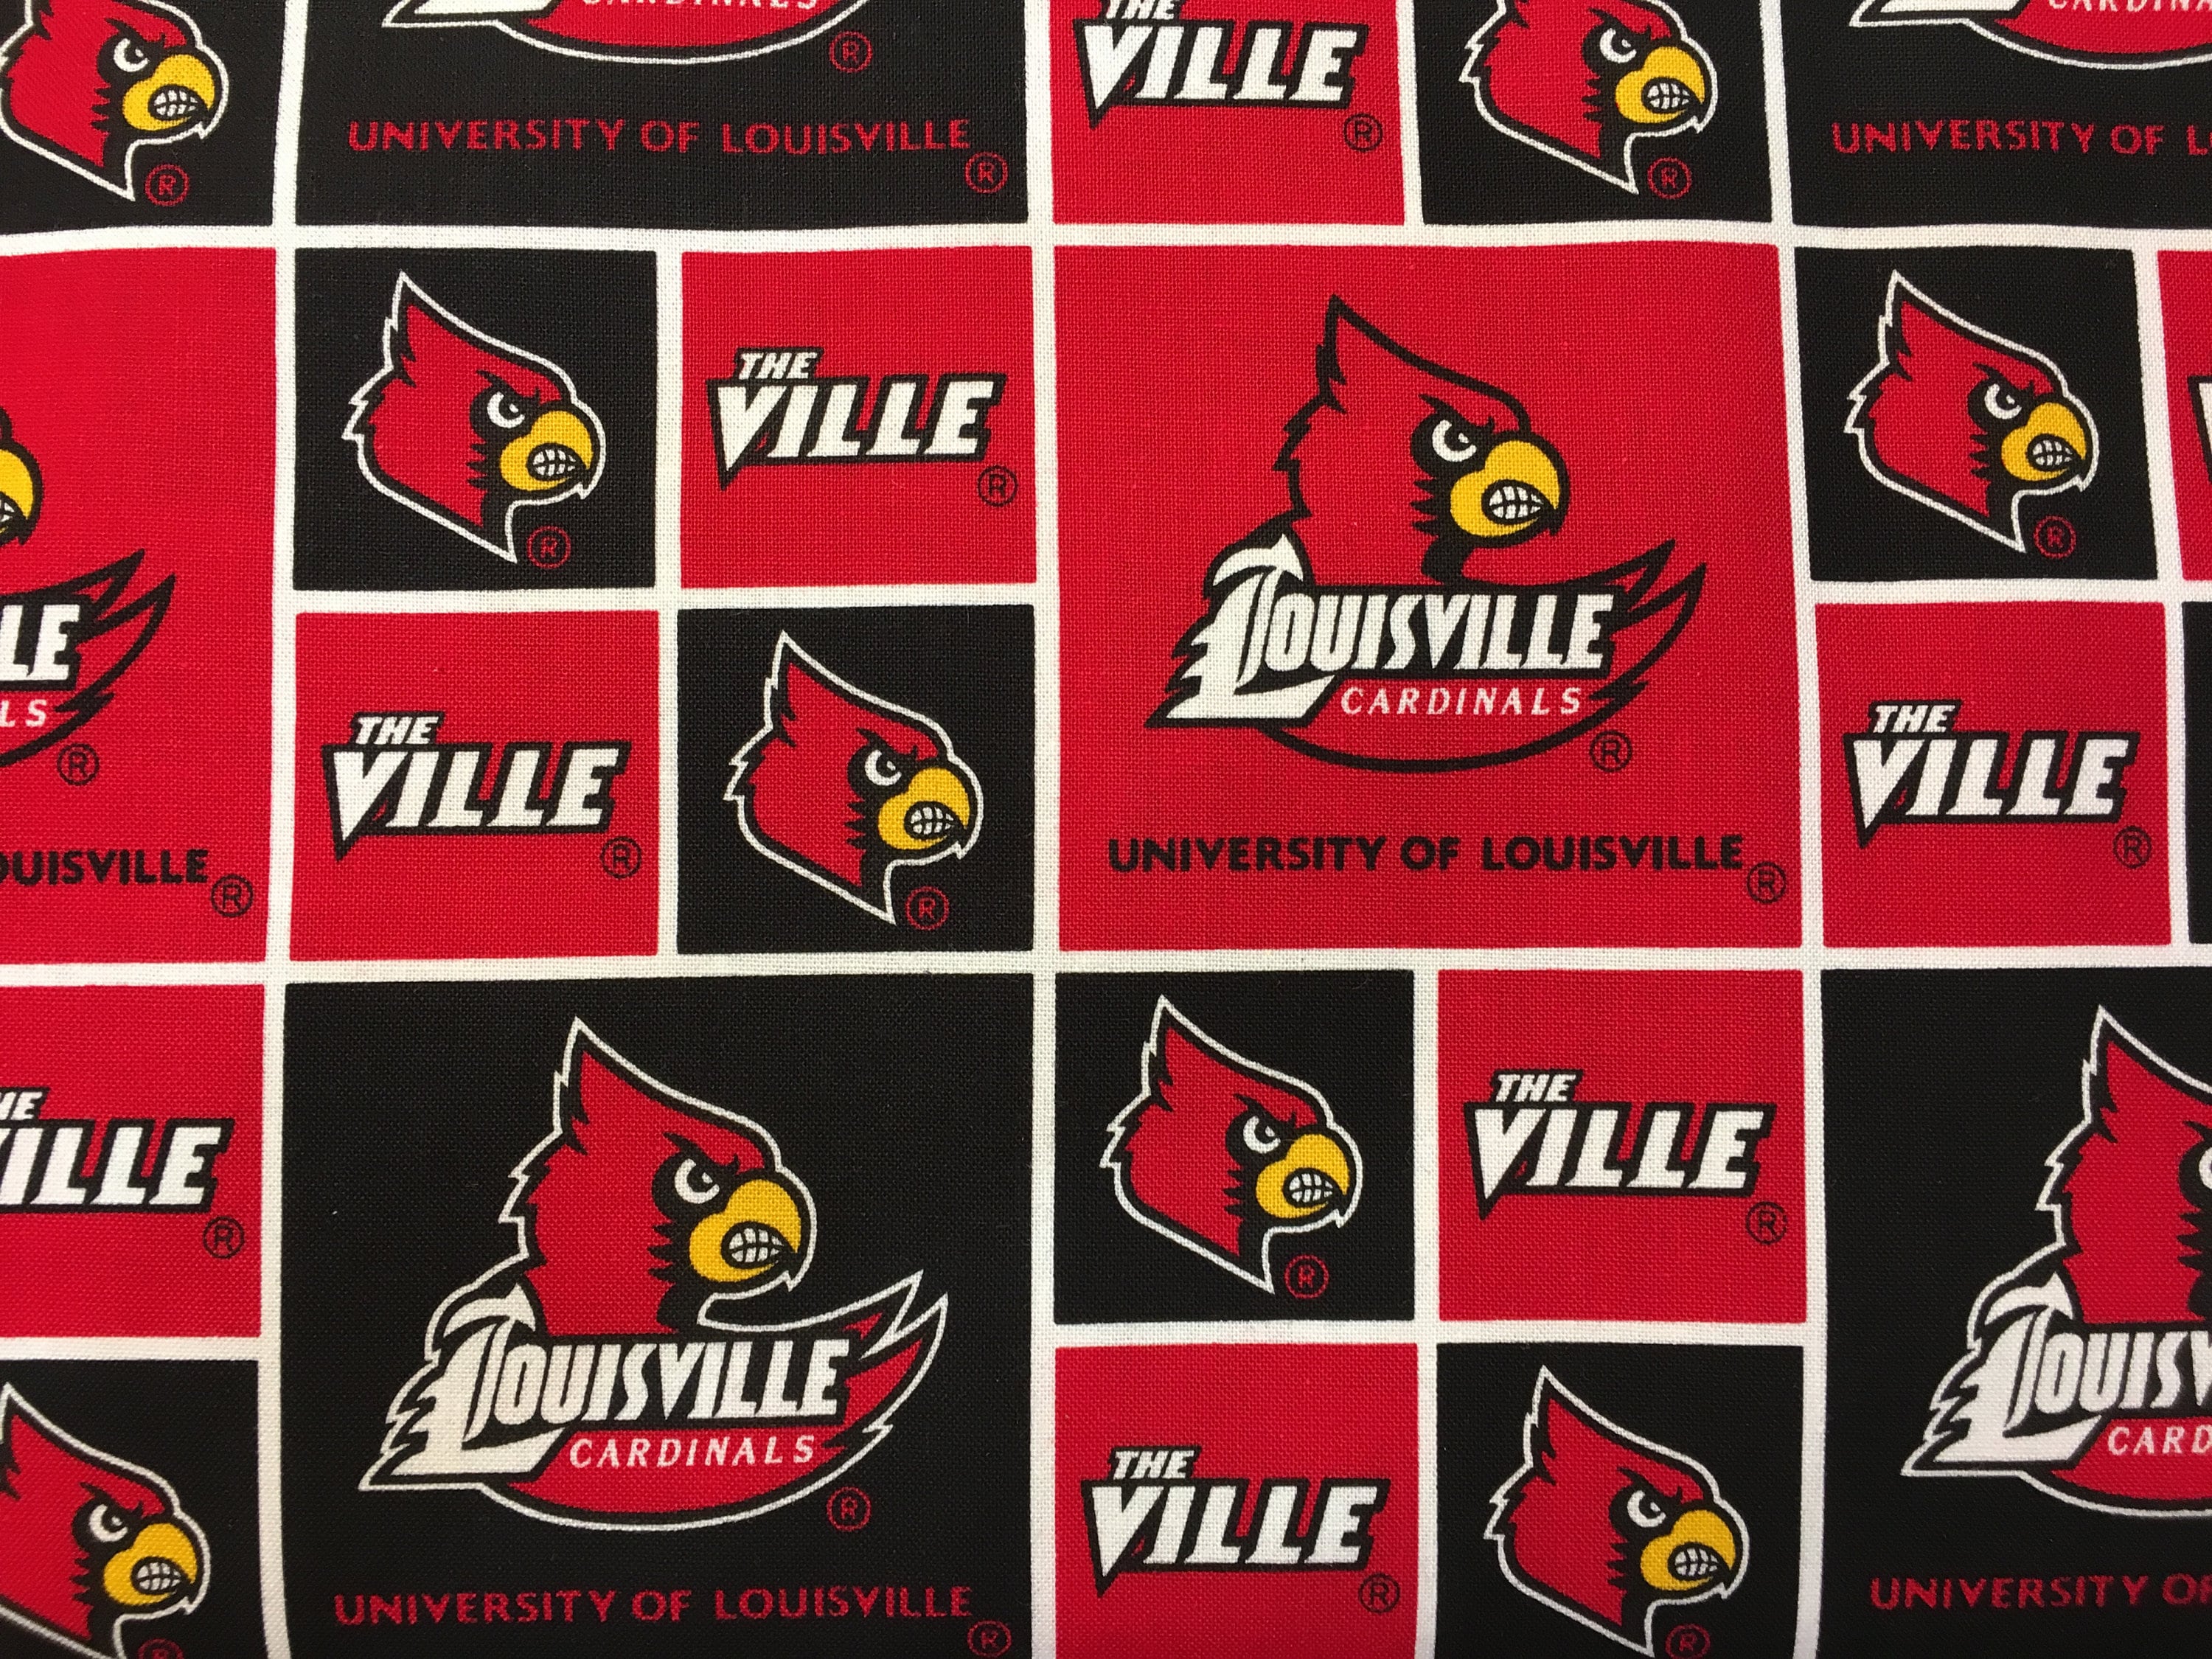 University of Louisville Cotton Fabric by Sykel-louisville 